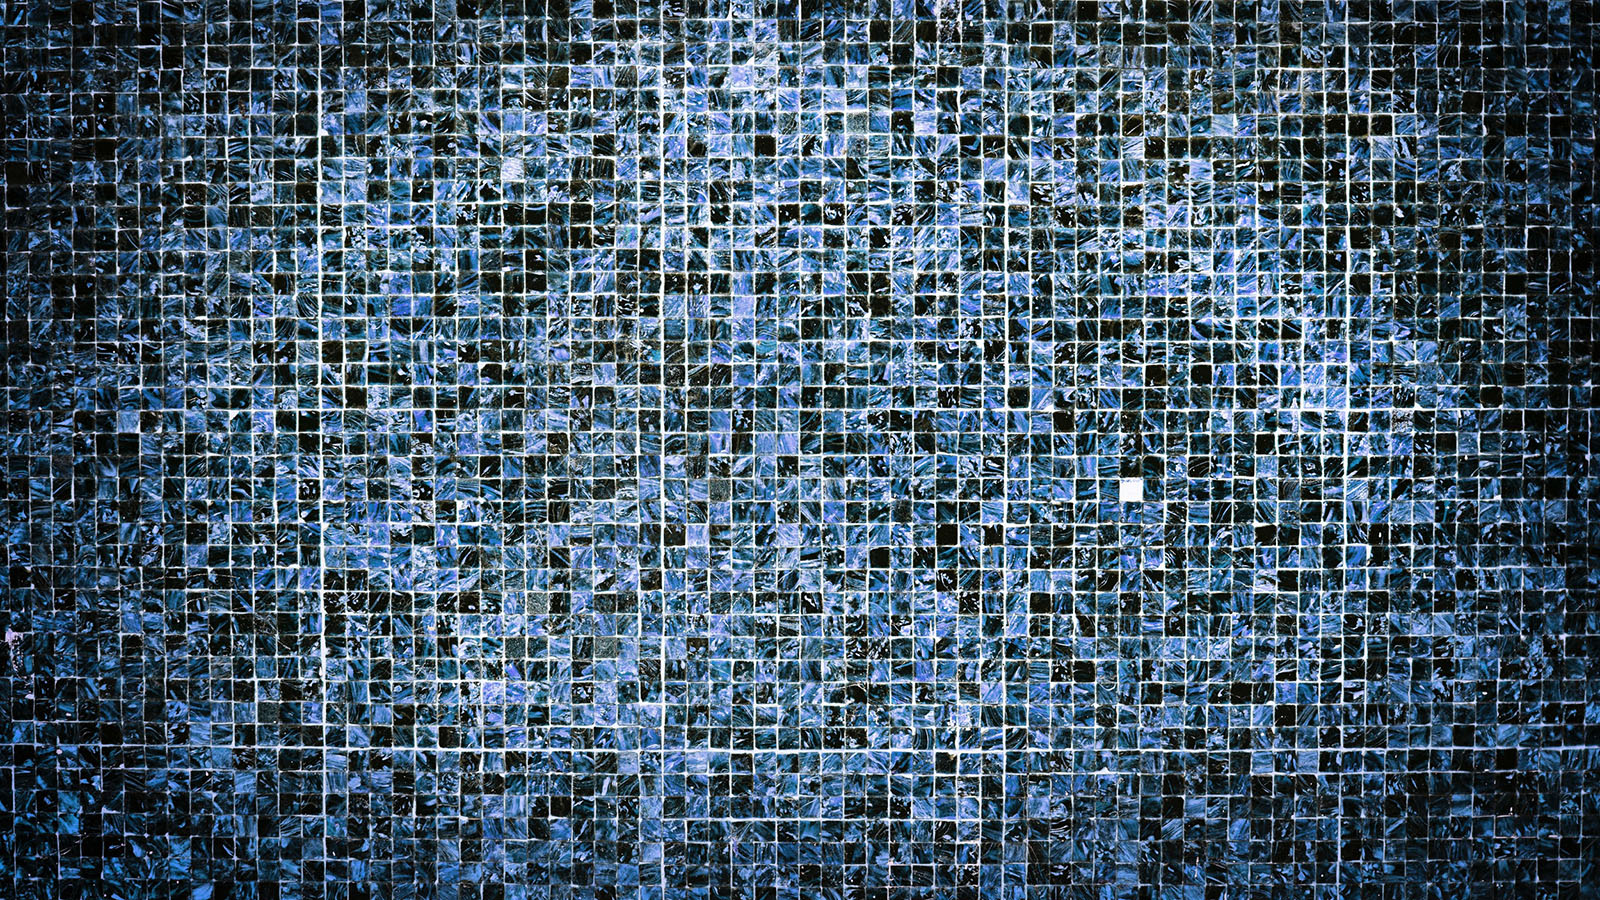 Modern luxury bathroom blue interior